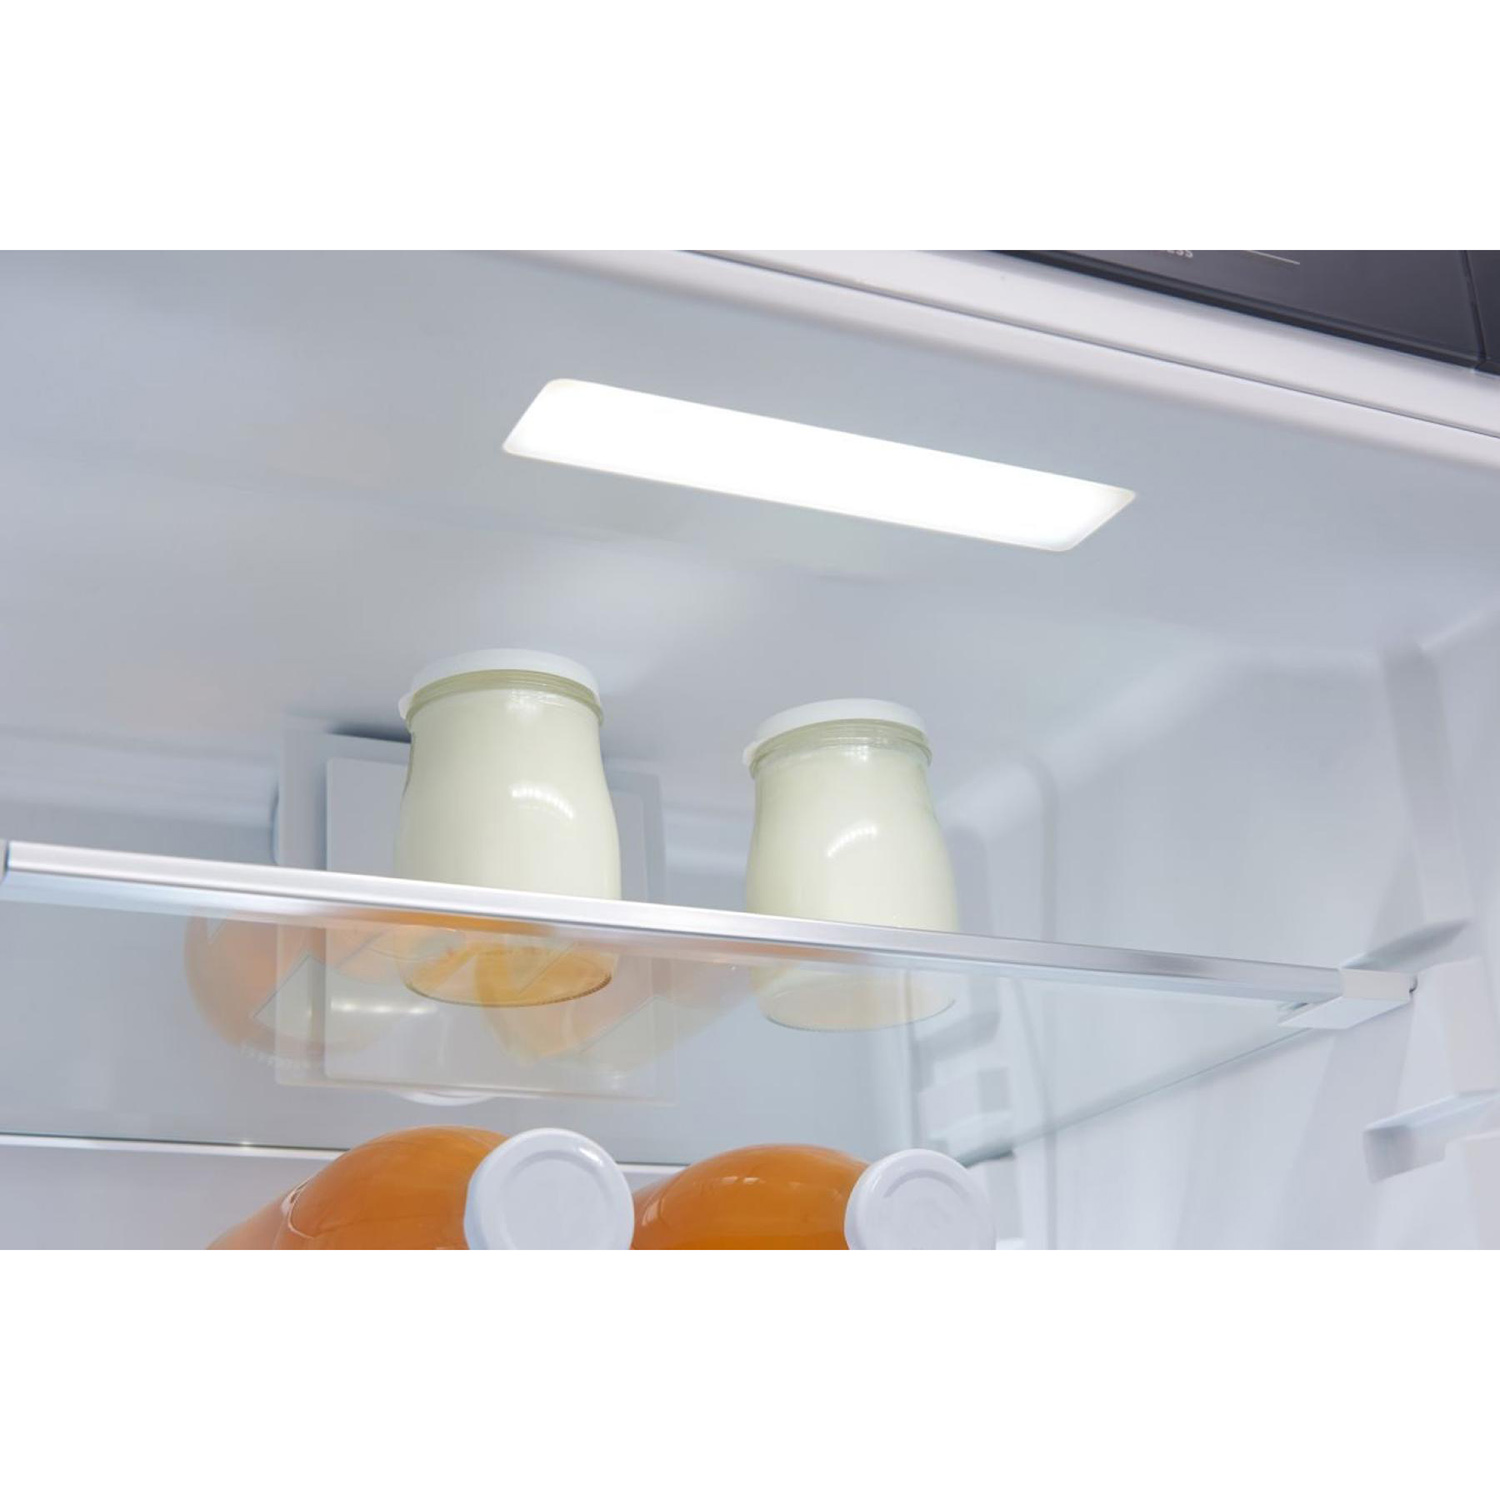 Холодильник Gorenje RI4182E1, цвет белый - фото 6